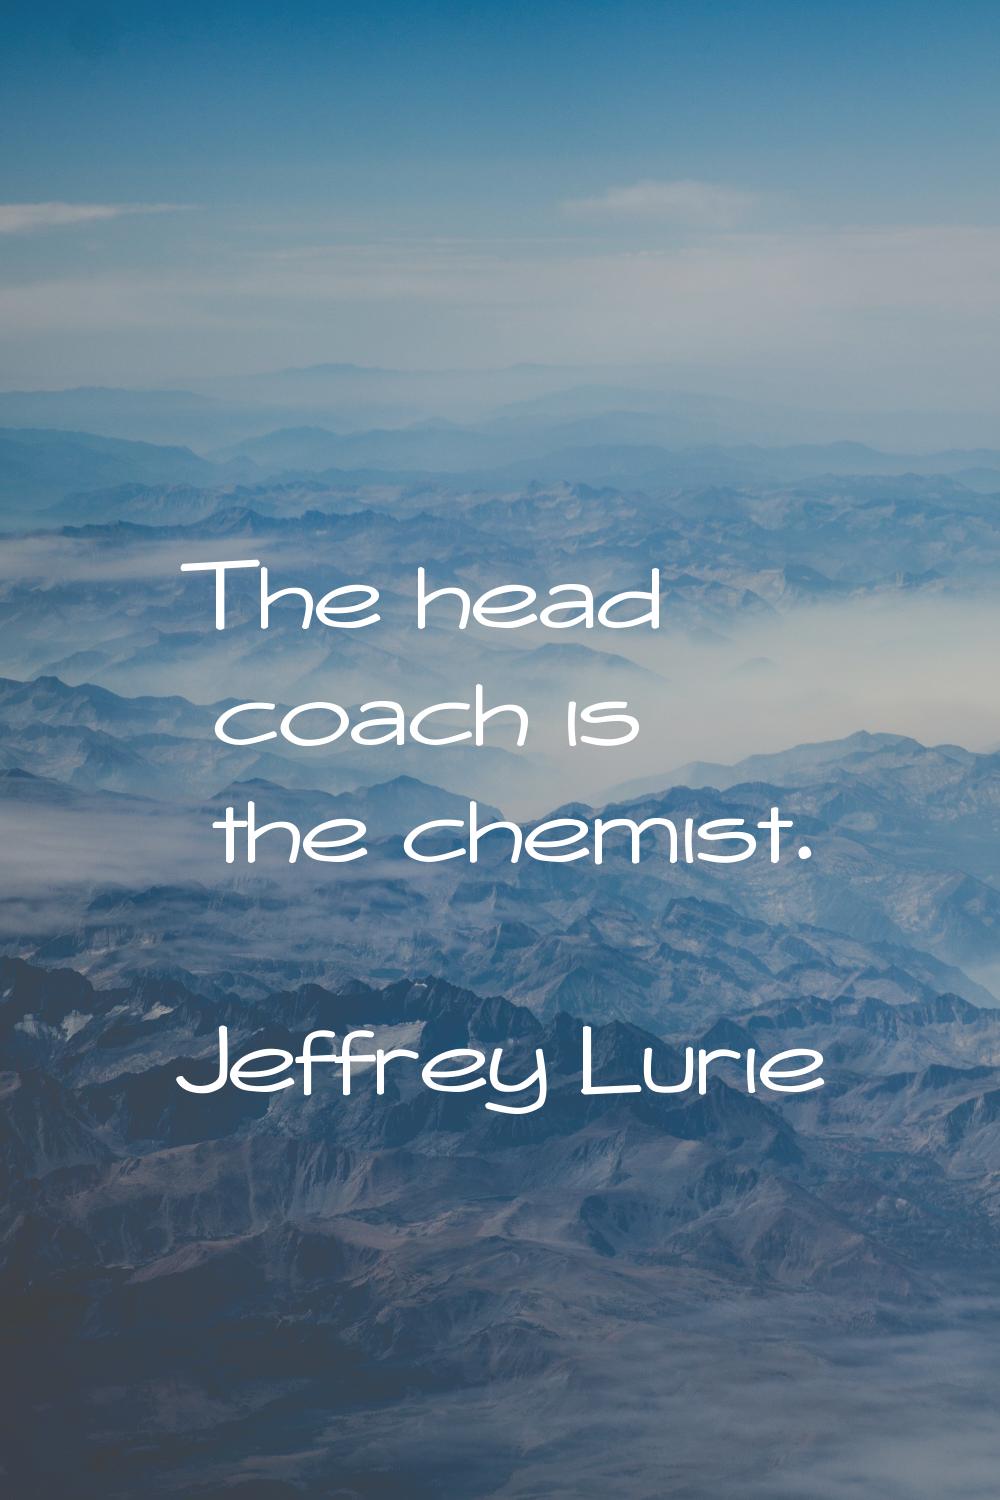 The head coach is the chemist.